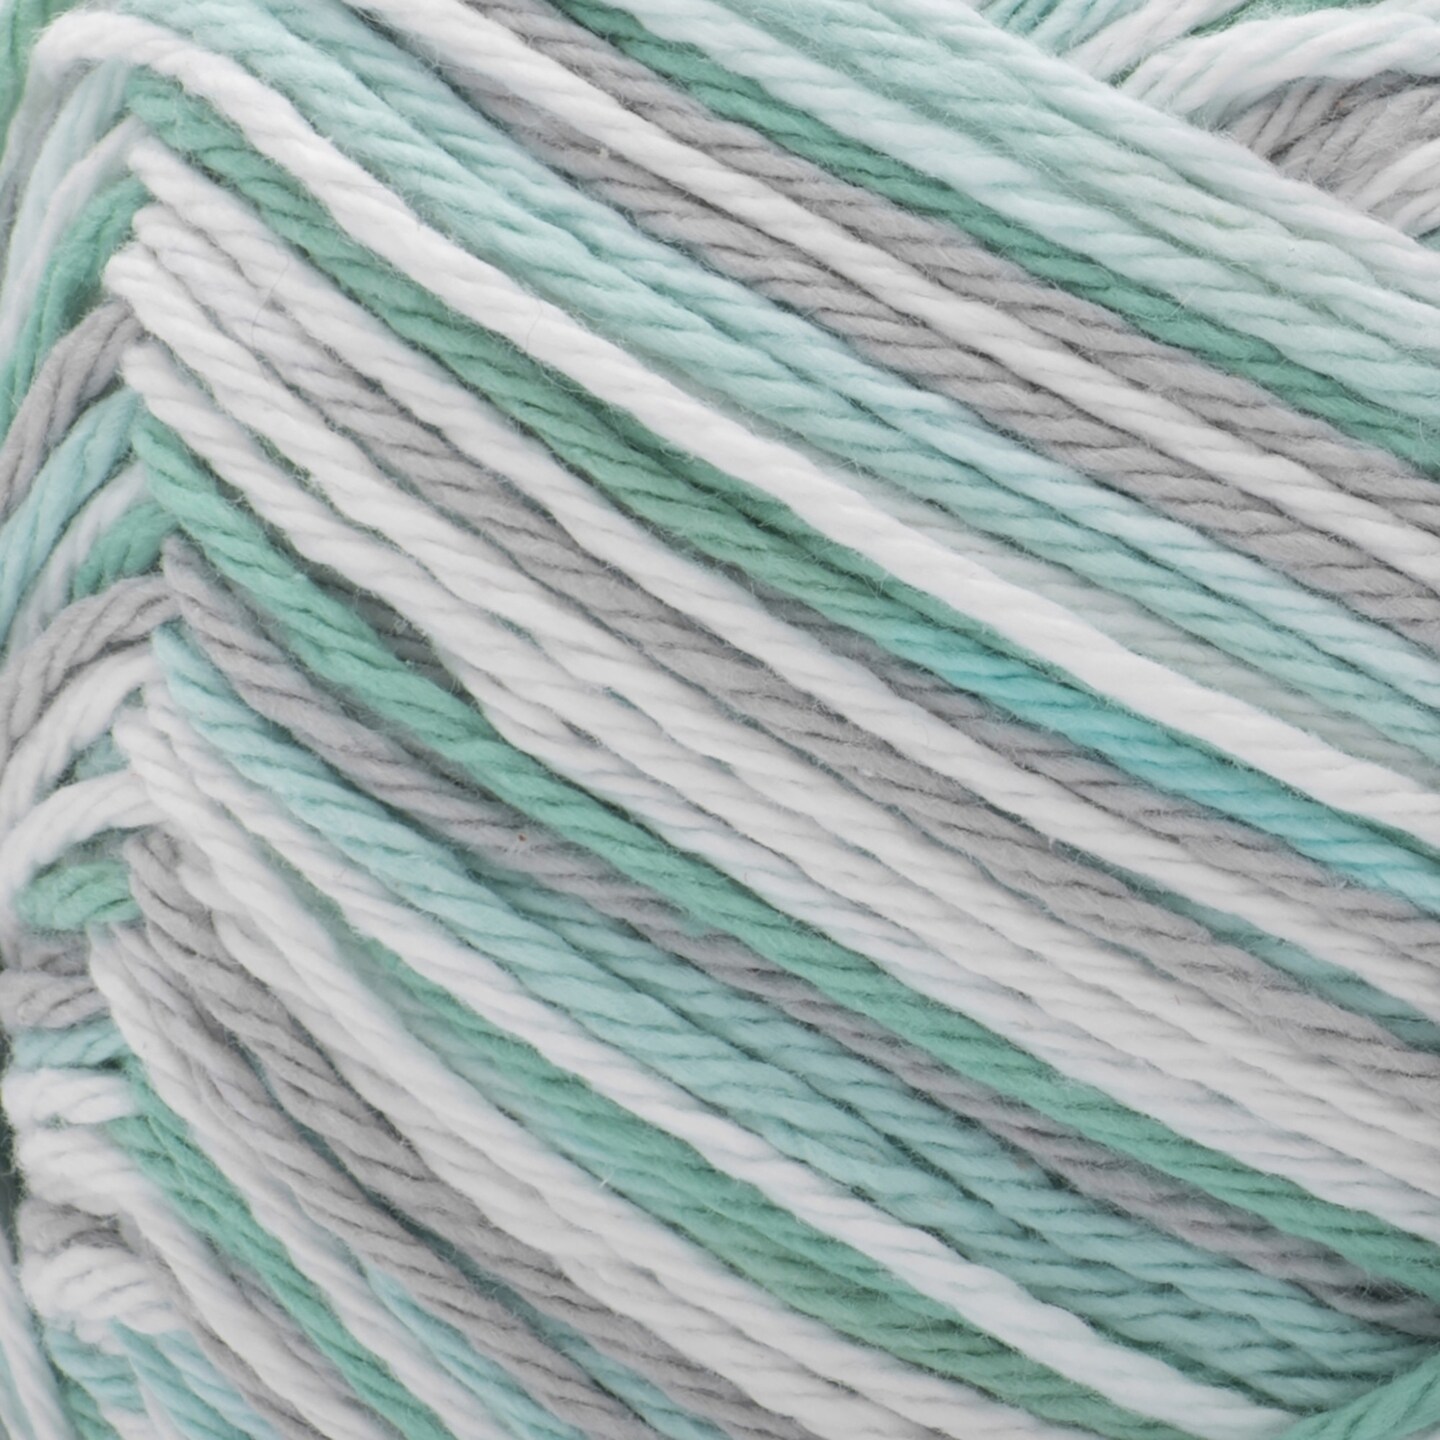 Bernat Handicrafter Cotton Yarn 340g - Ombres-Hippi, 1 count